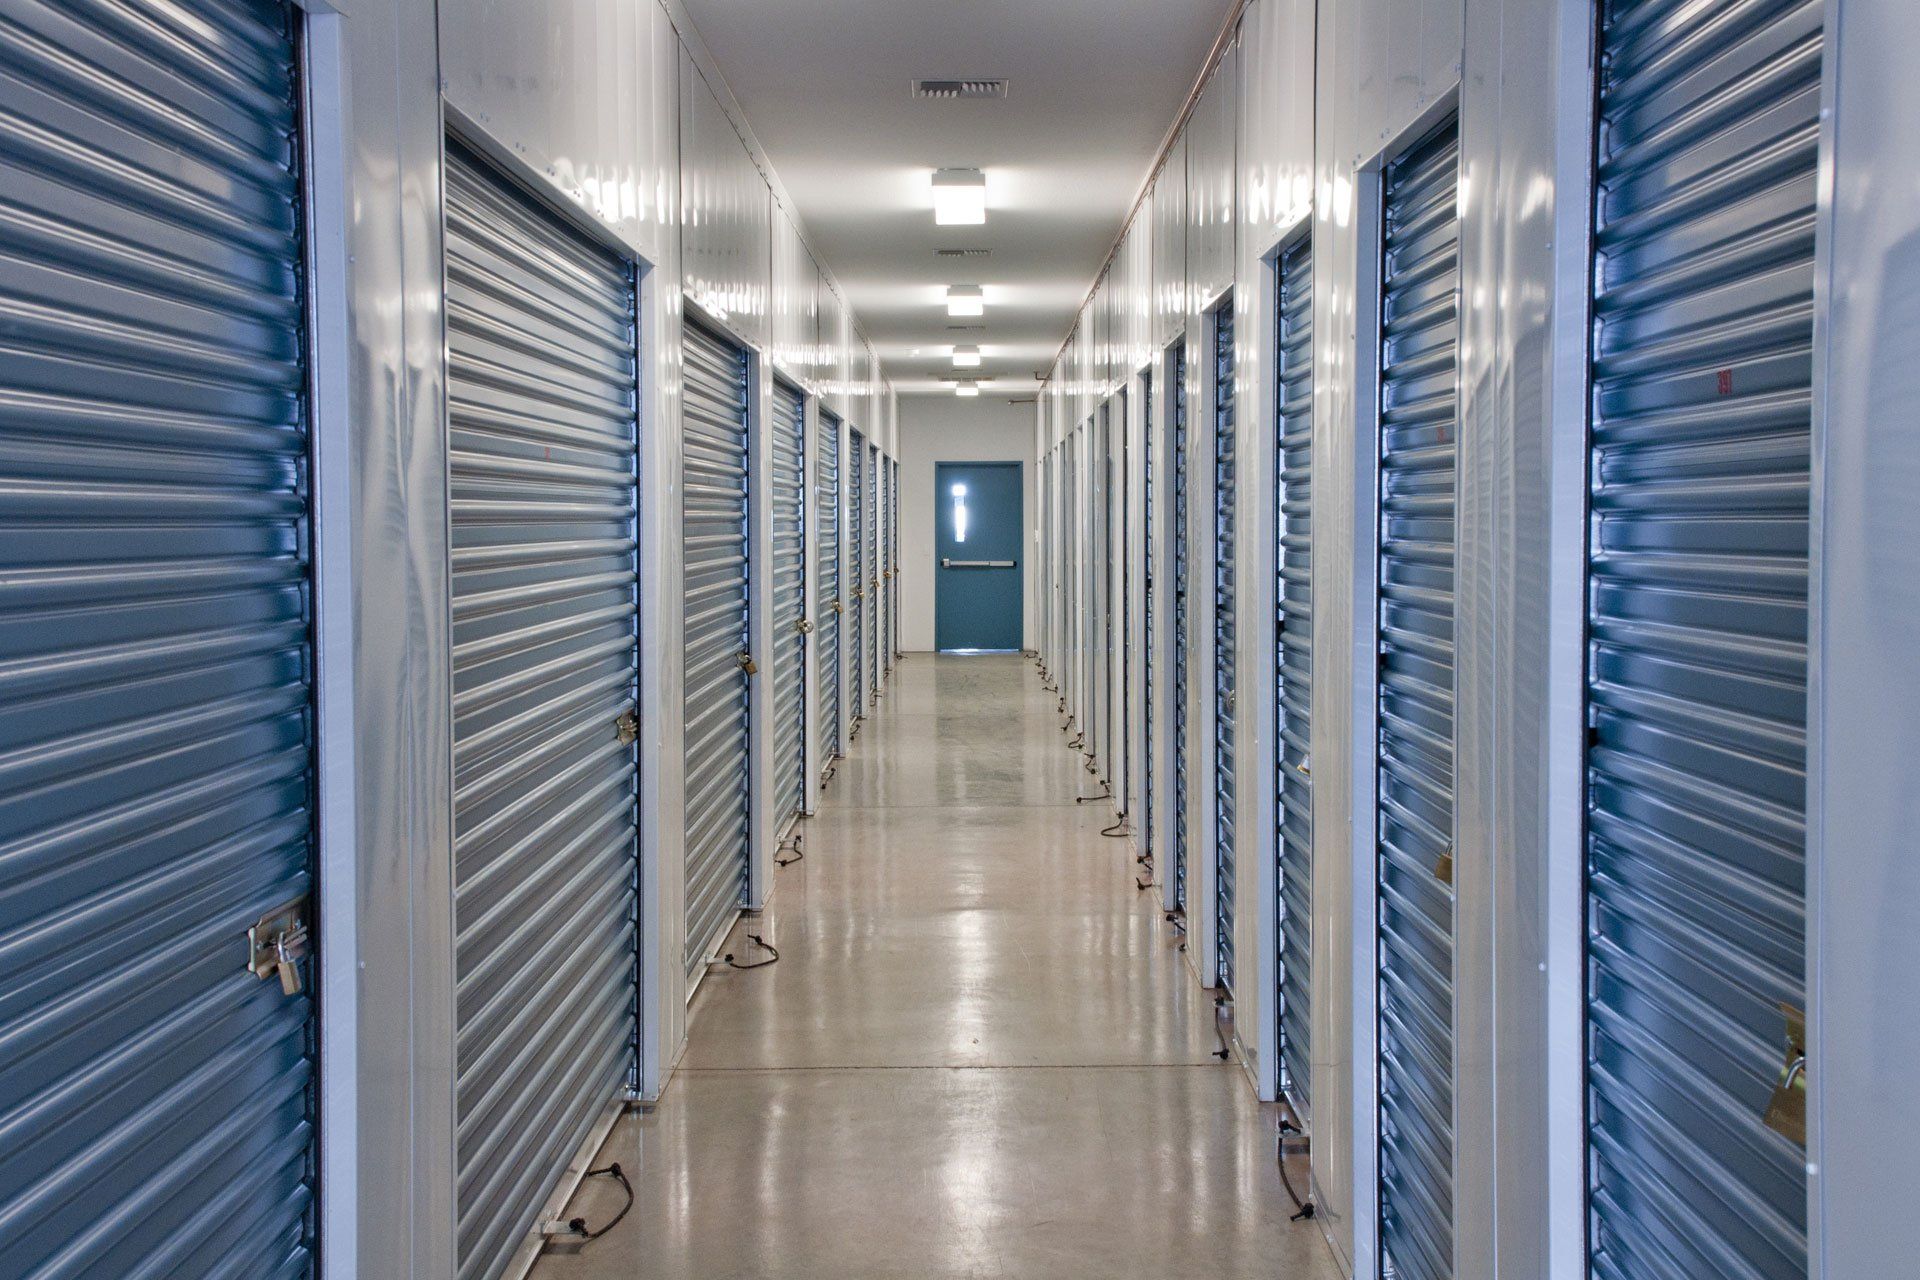 Metal storage units